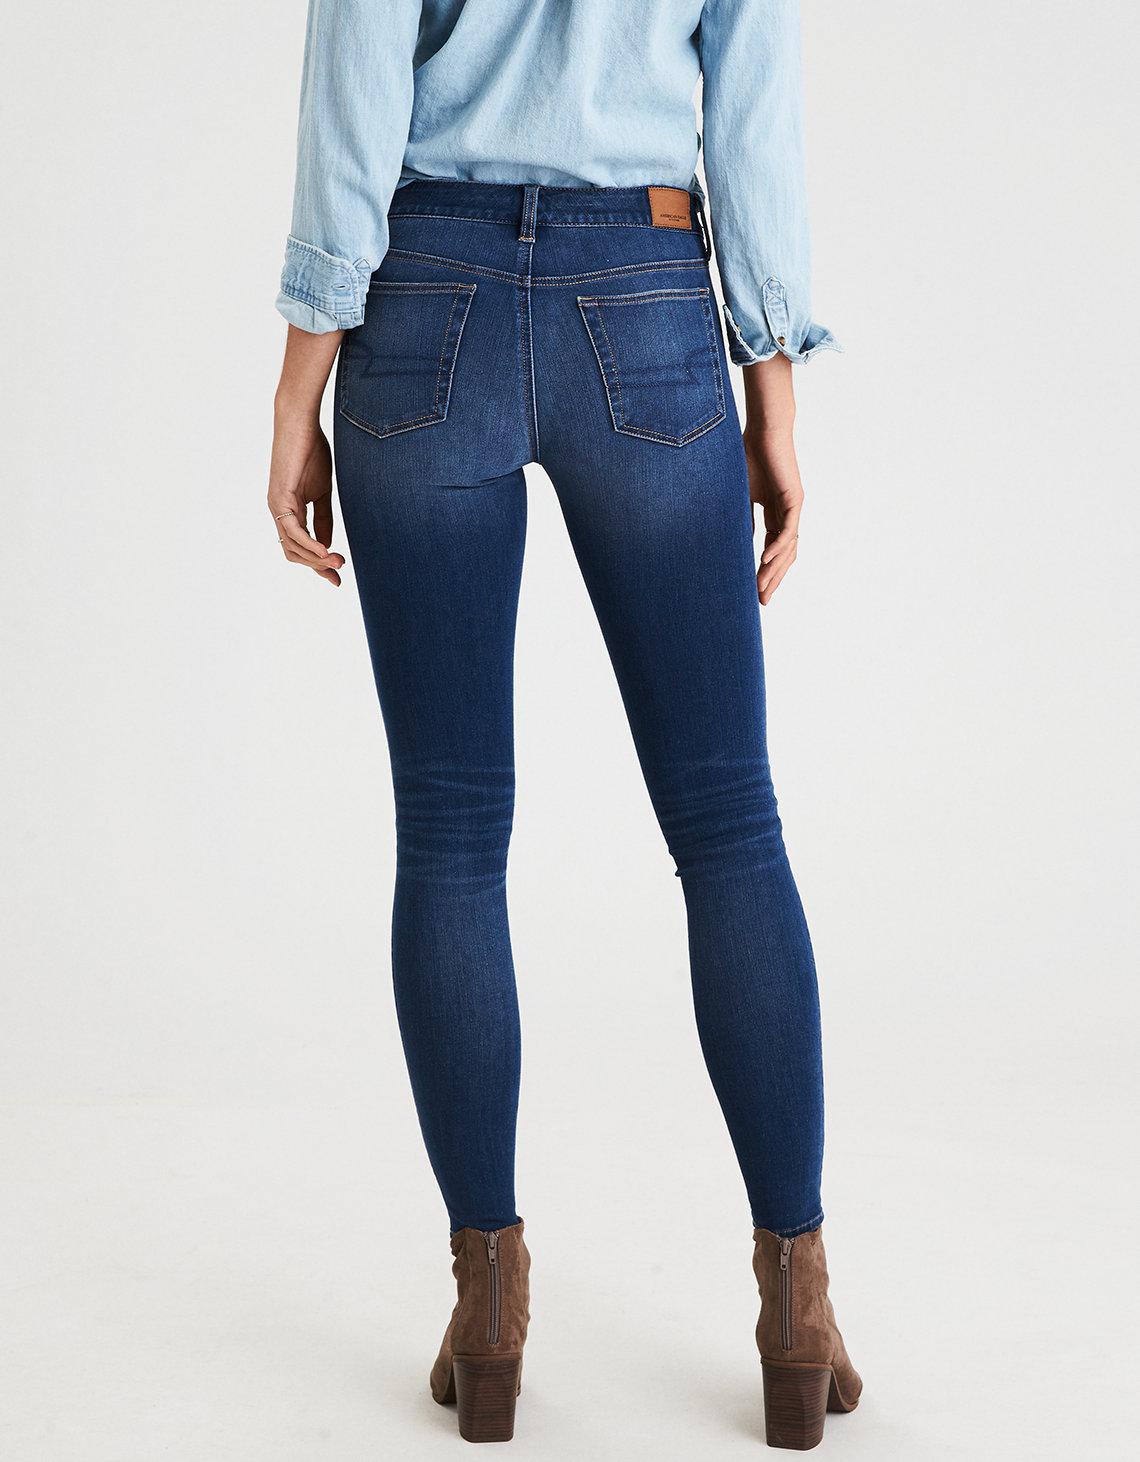 Buy h&m super skinny high waist jeans cheap online